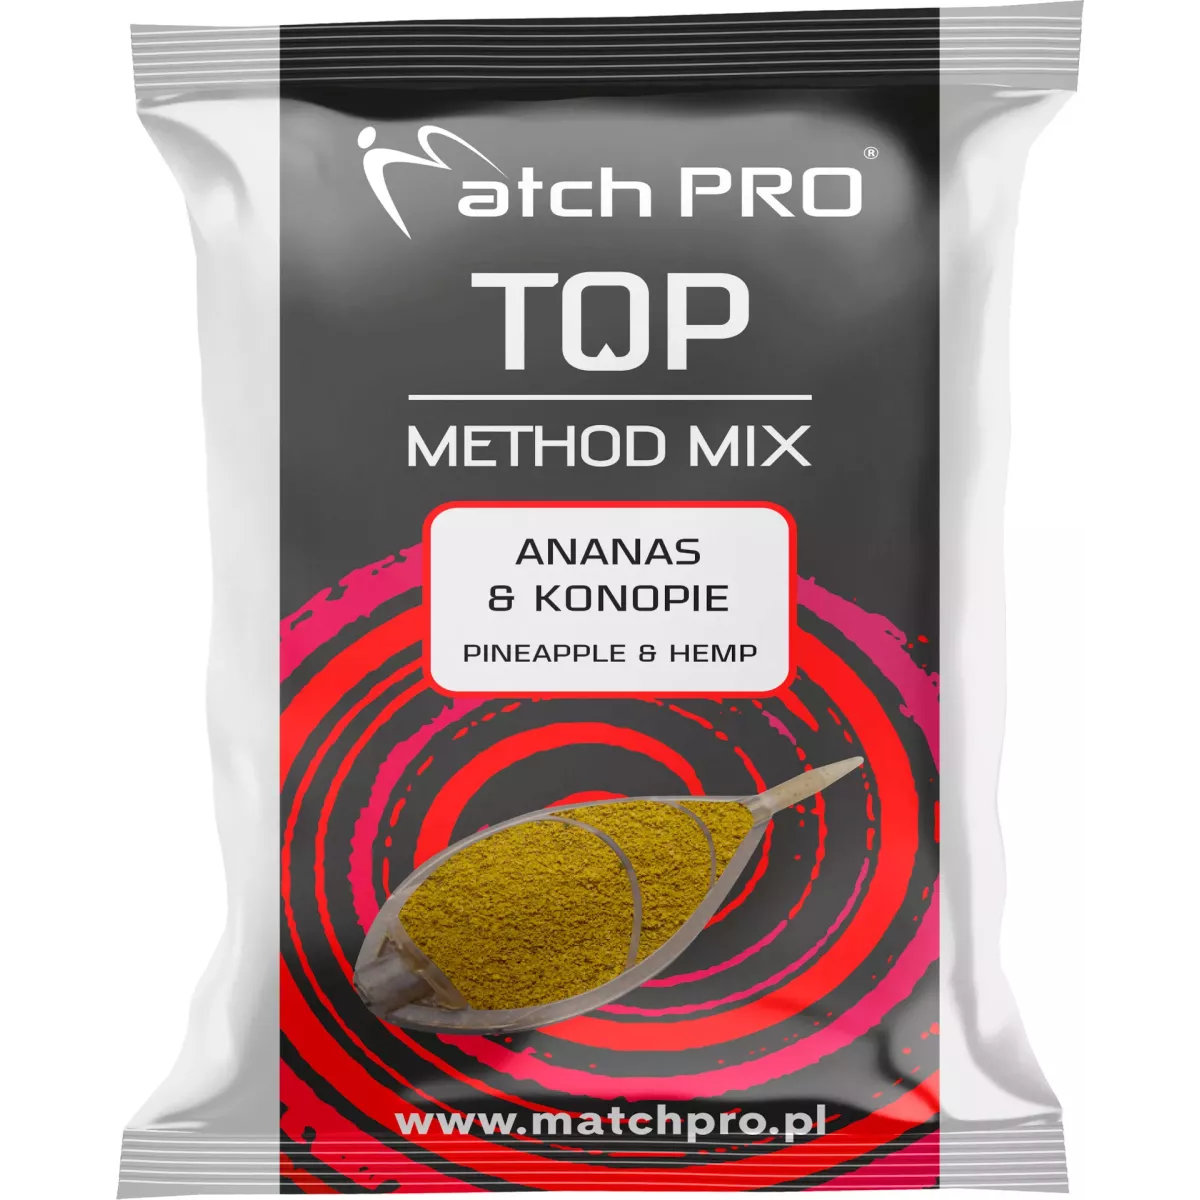 Zanęta MatchPro Method Mix TOP 700g - ANANAS & KONOPIE